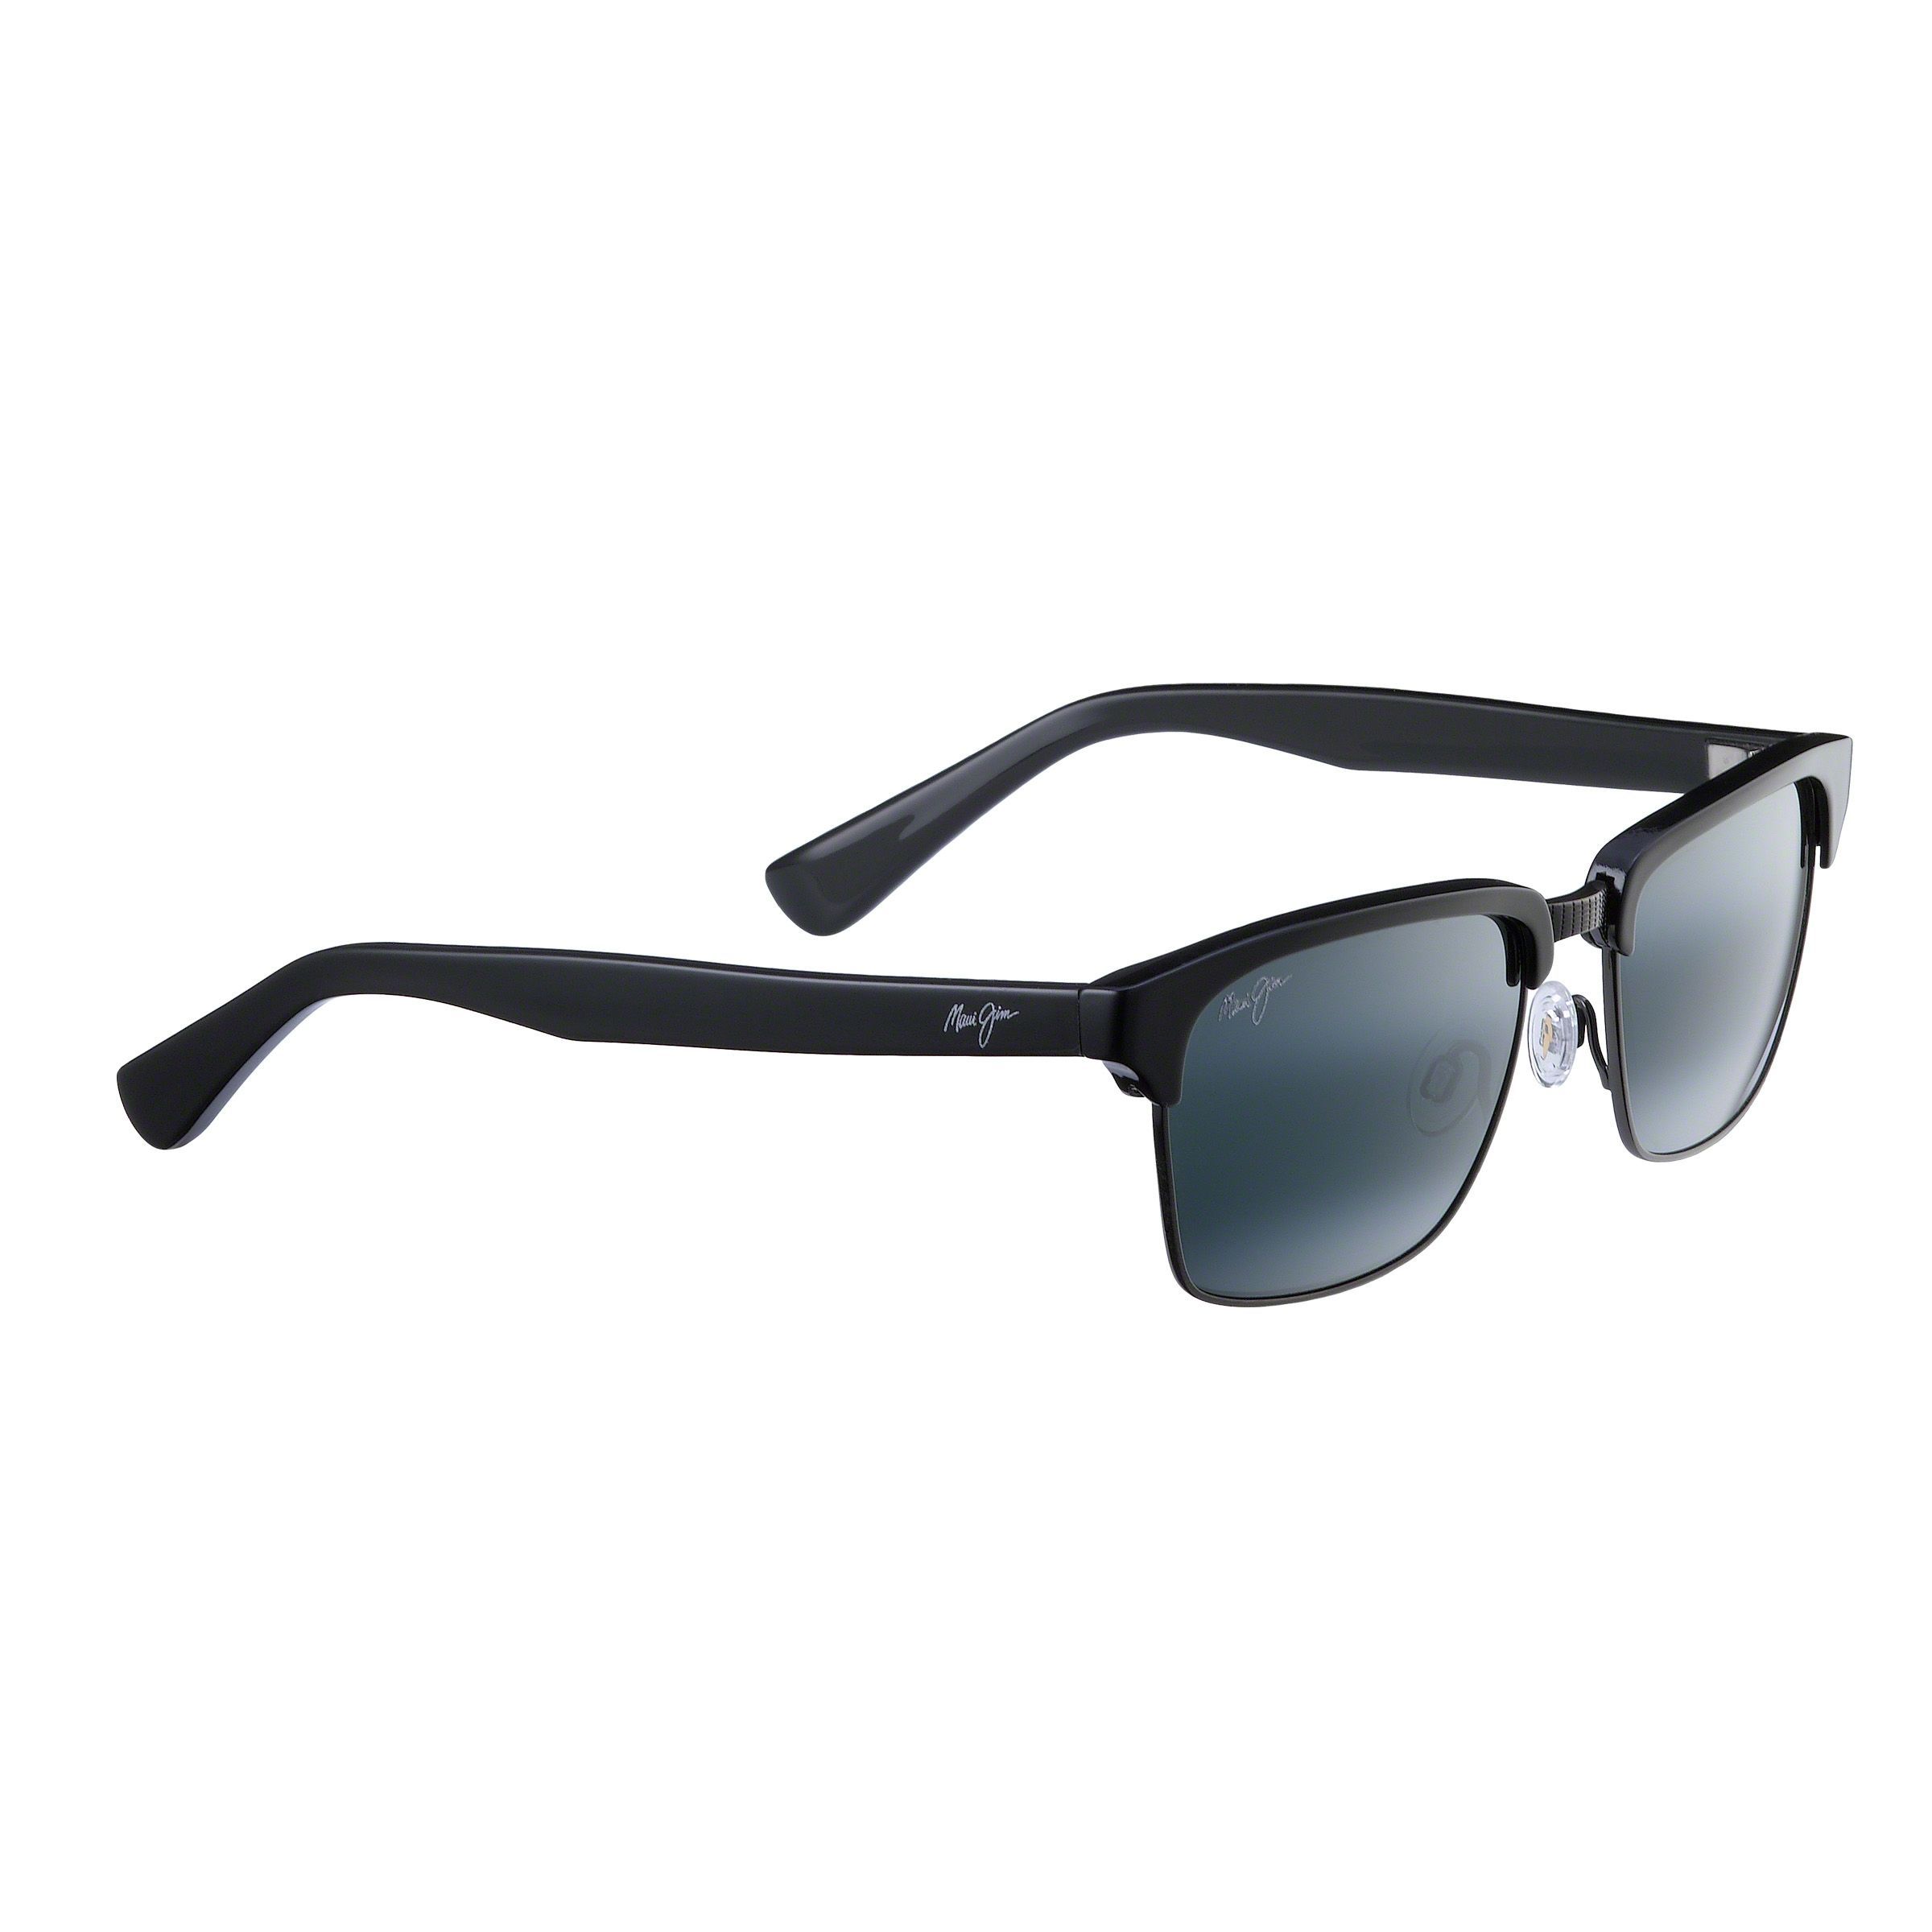 KAWIKA Square Sunglasses 17C - size 54